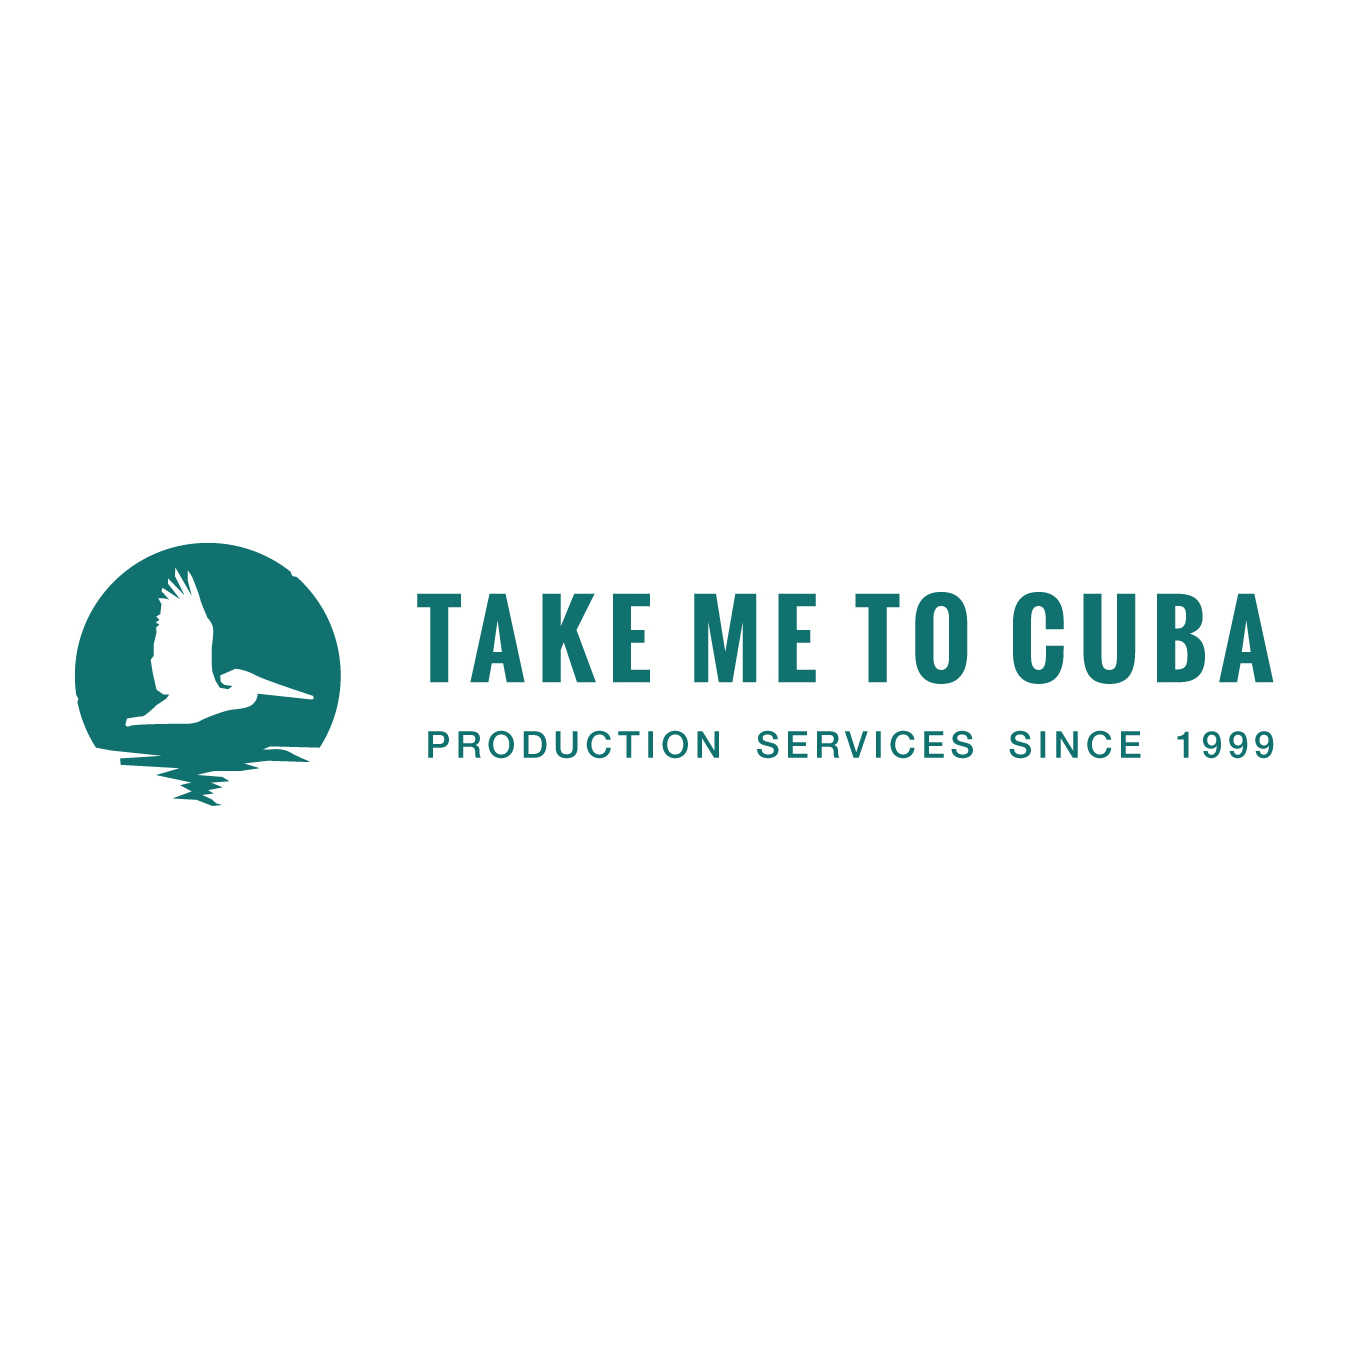 TAKE ME TO CUBA